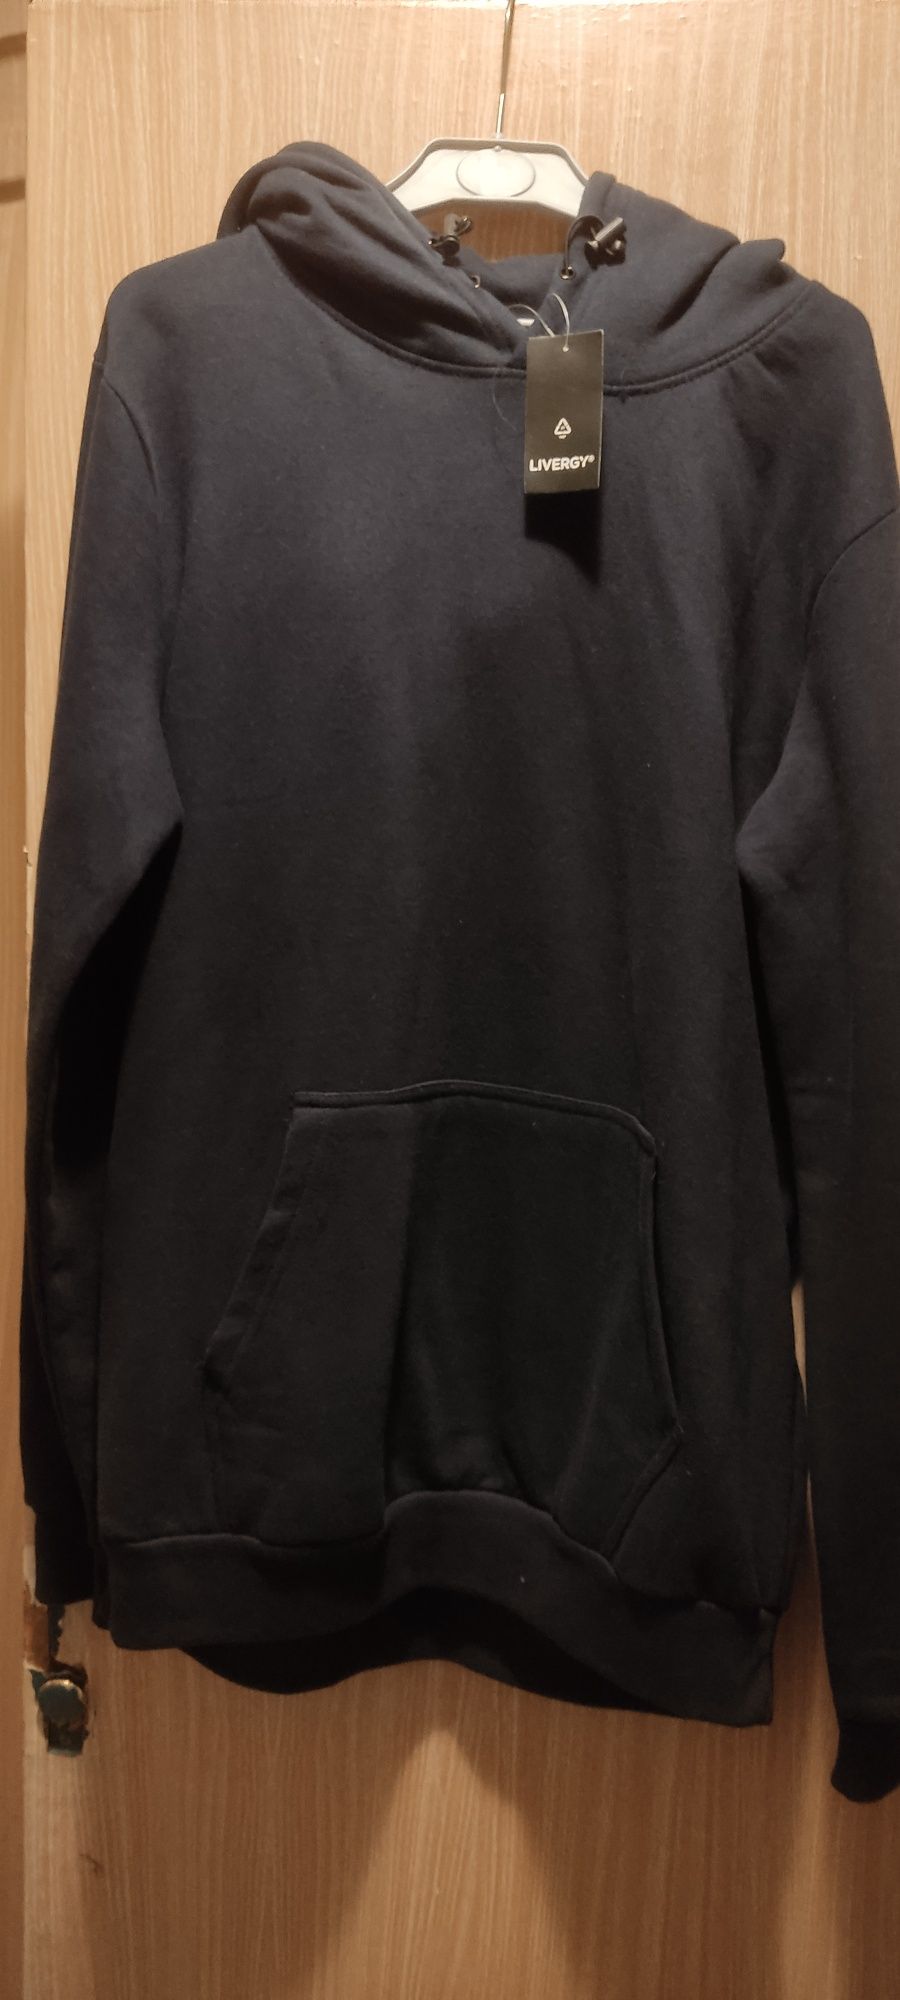 Granatowa bluza męska XL (nowa)